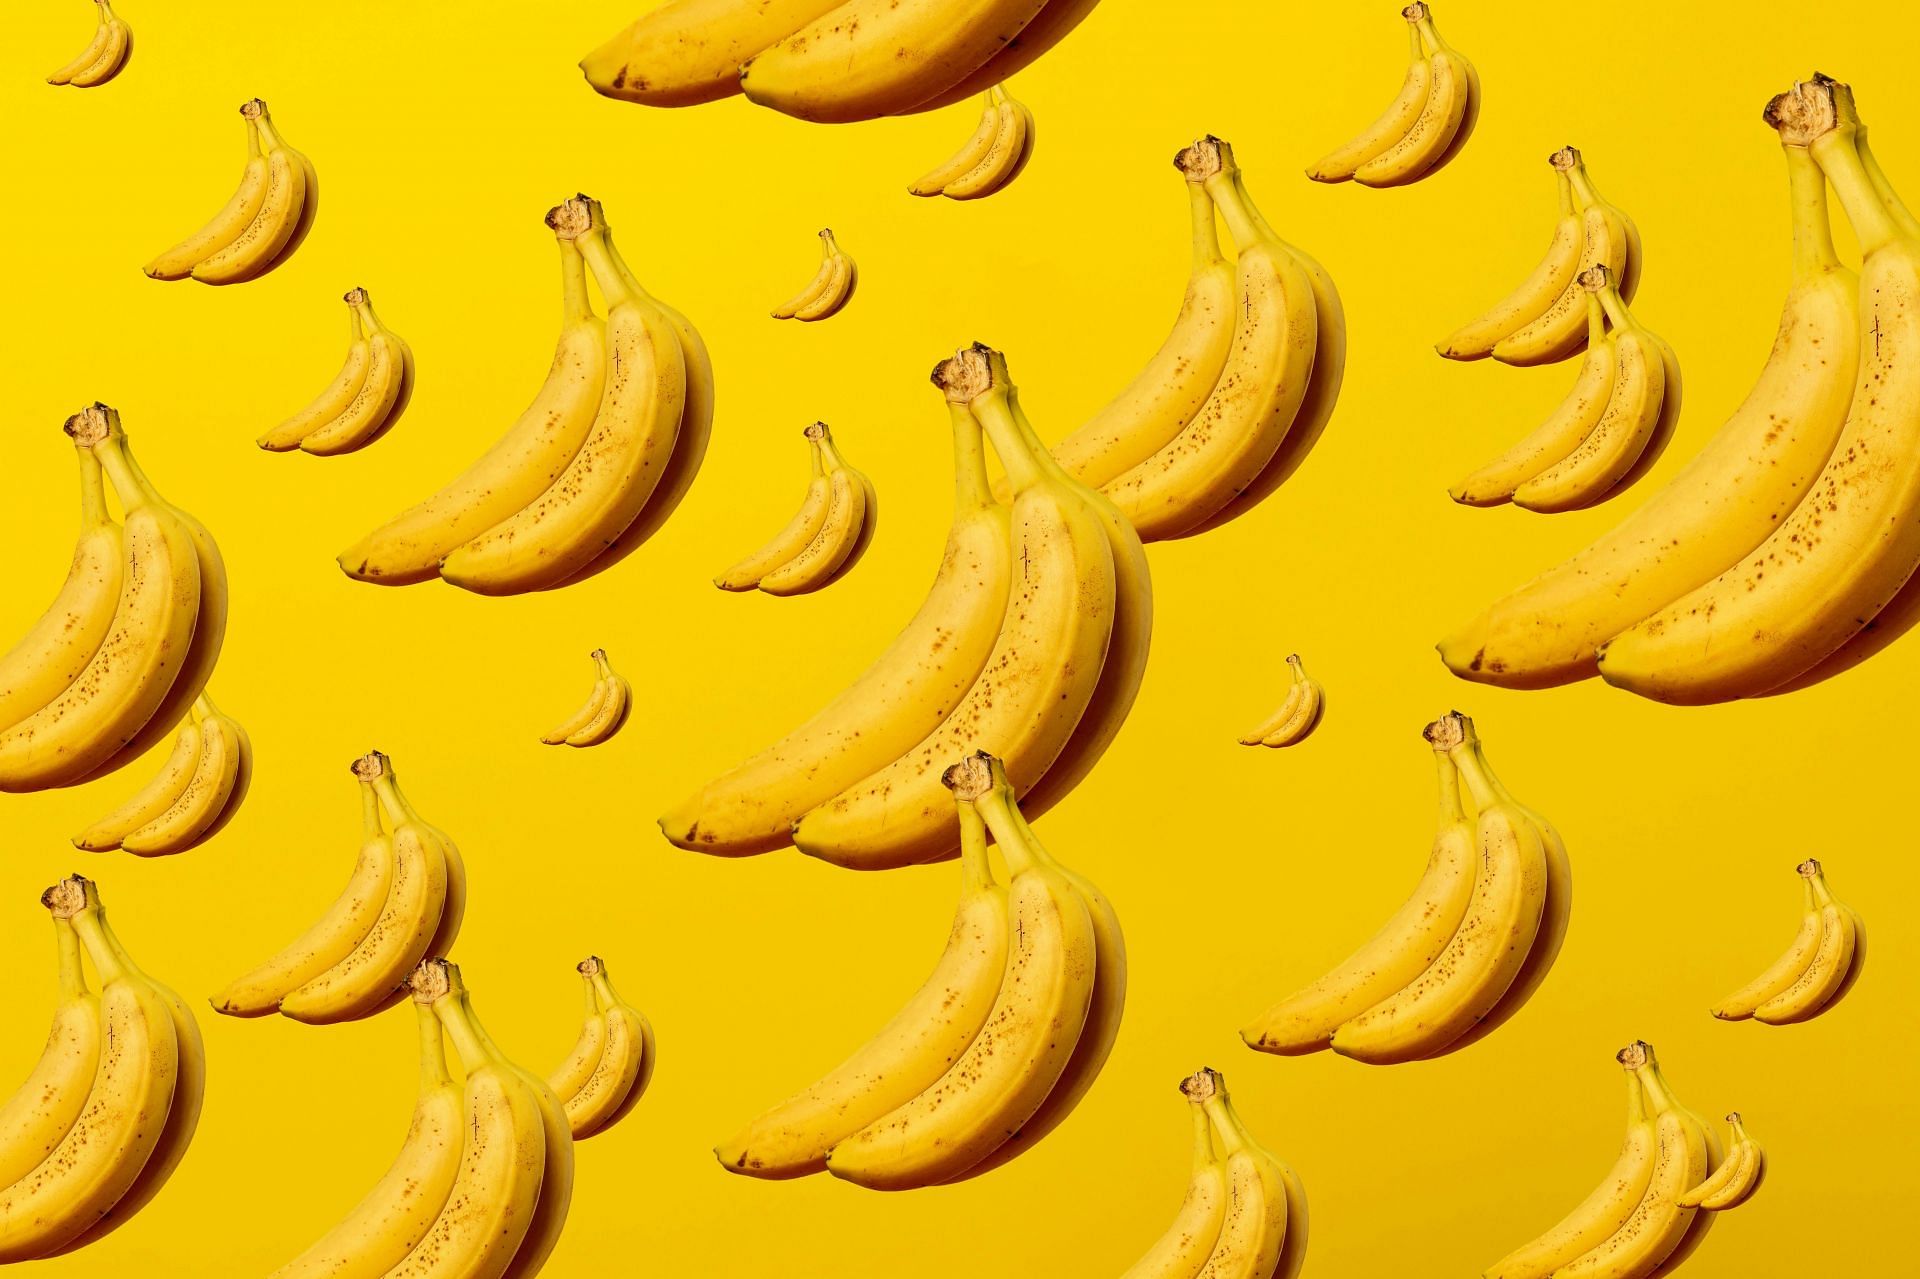 morning banana diet (image sourced via Pexels / Photo by aleksandar)